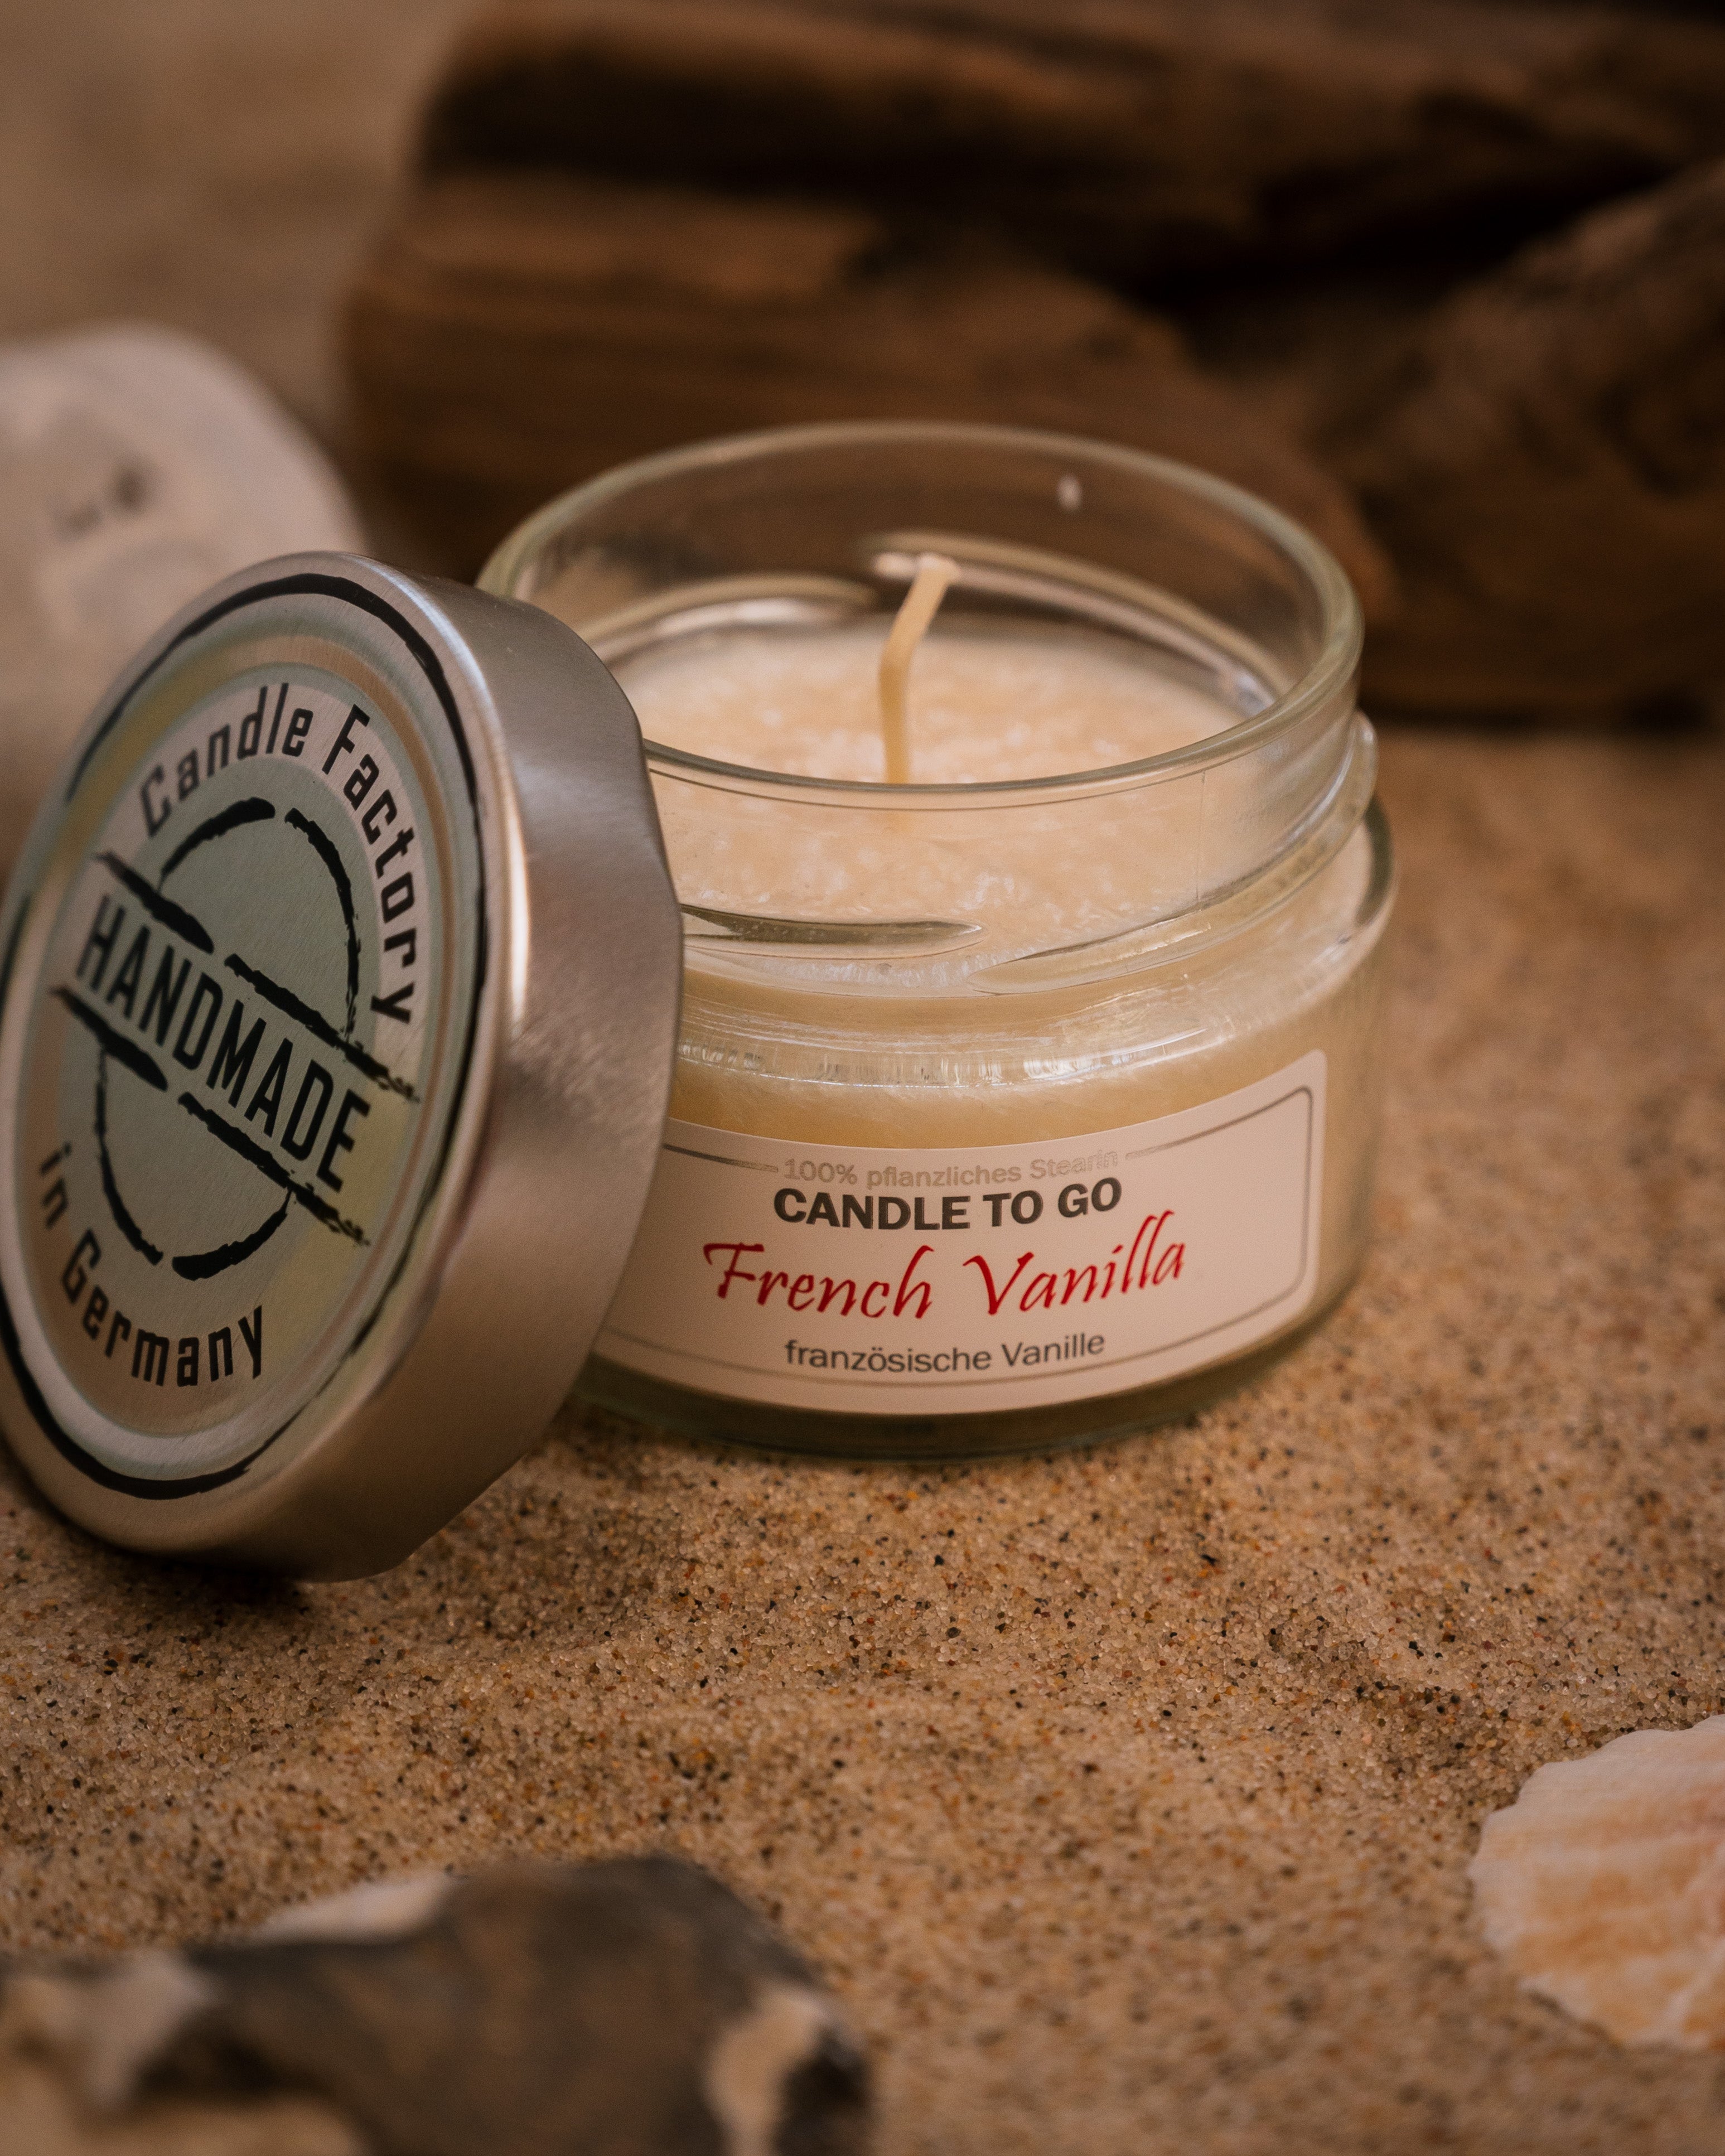 Candle to go "French Vanilla" - Harmonisierer